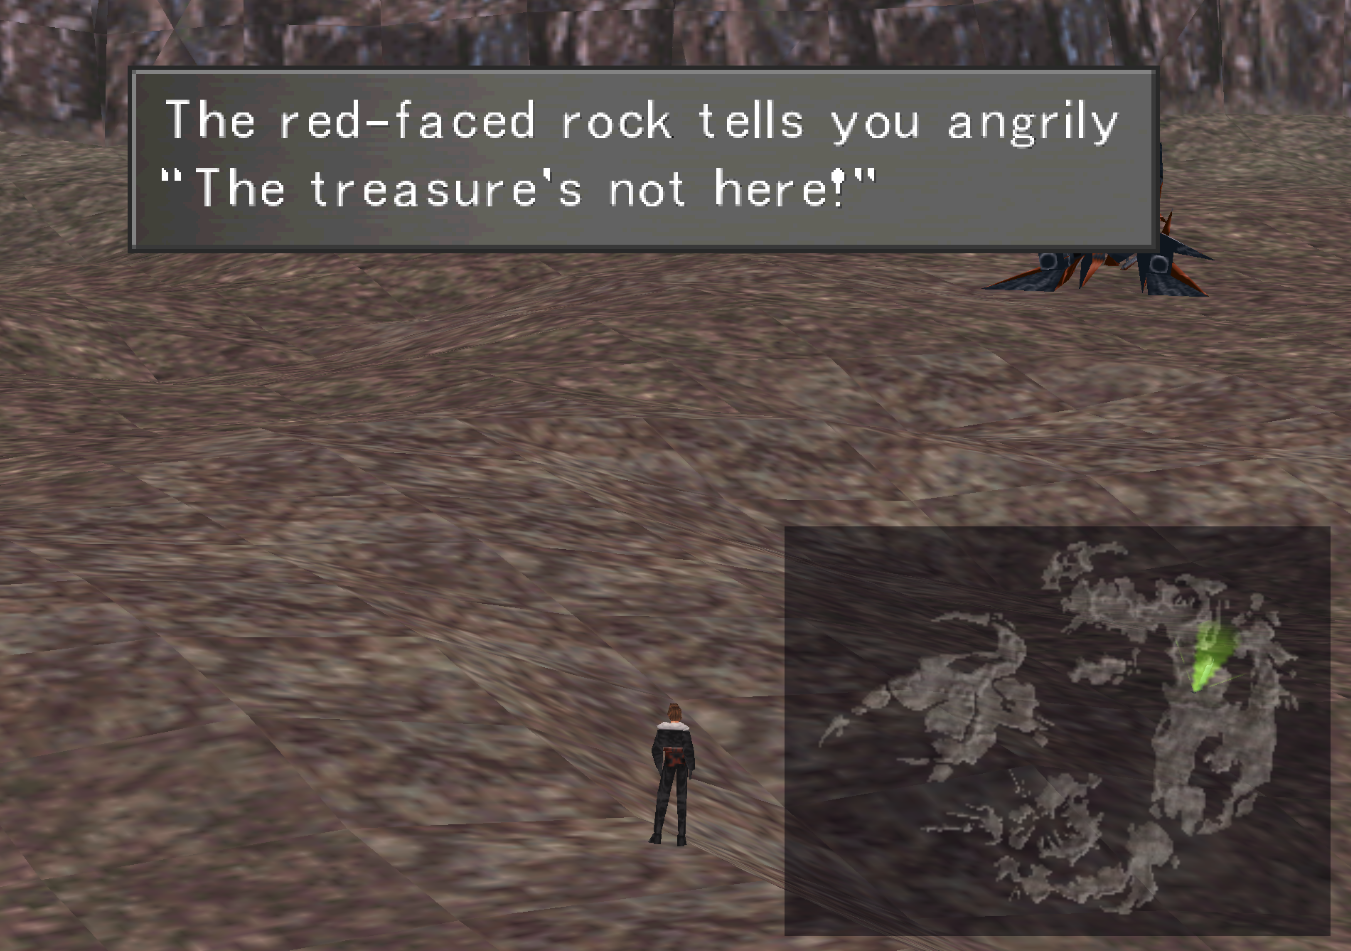 Red rock treasure is not here